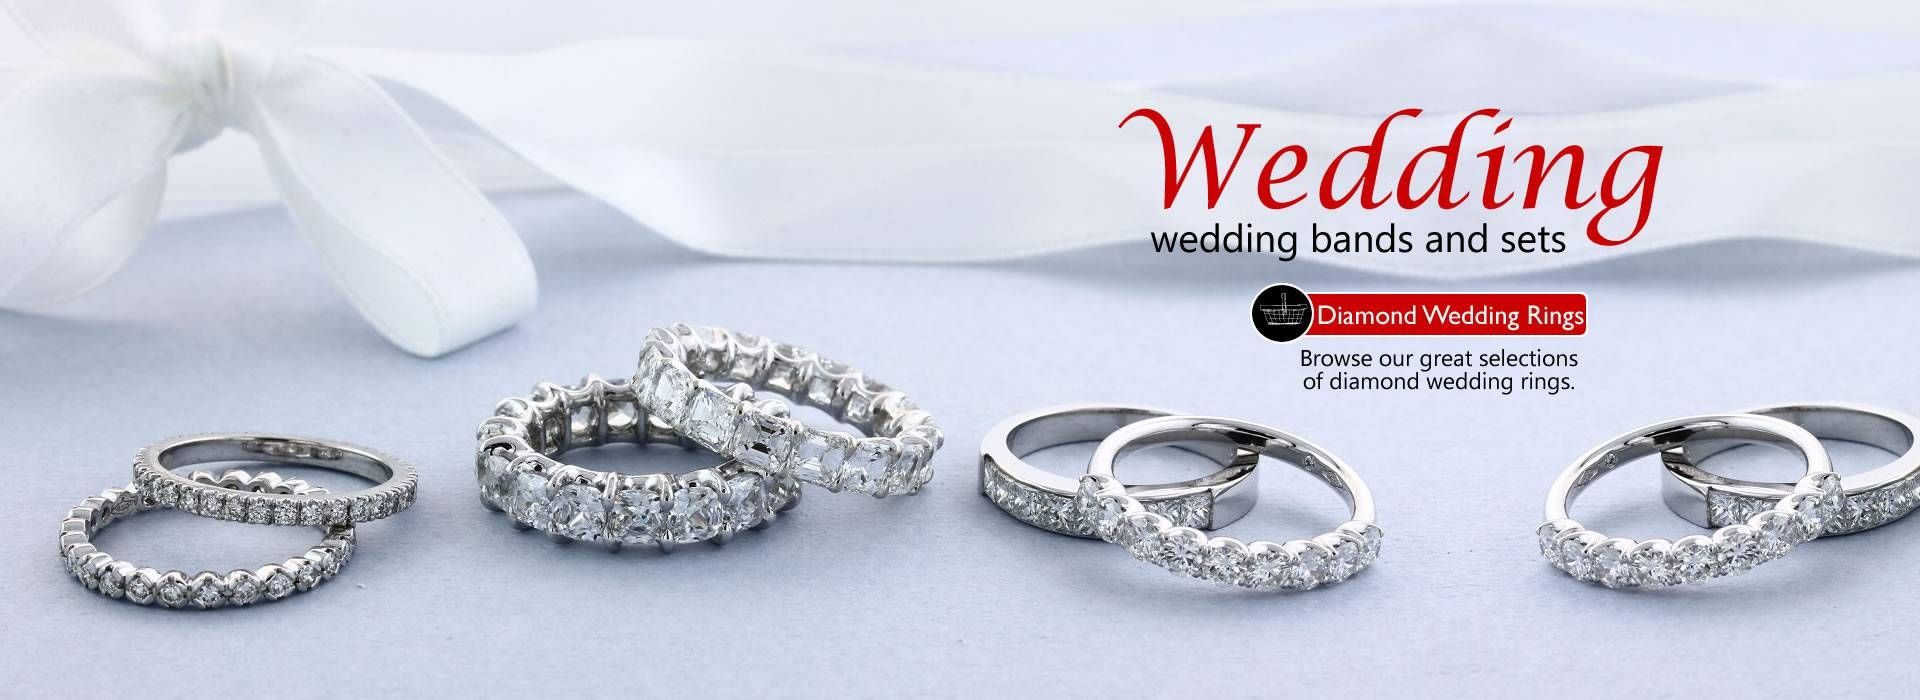 Luxor Fine Jewelry Store | Diamond Engagement Rings Atlanta Pertaining To Jewelry Stores Wedding Rings (View 10 of 15)